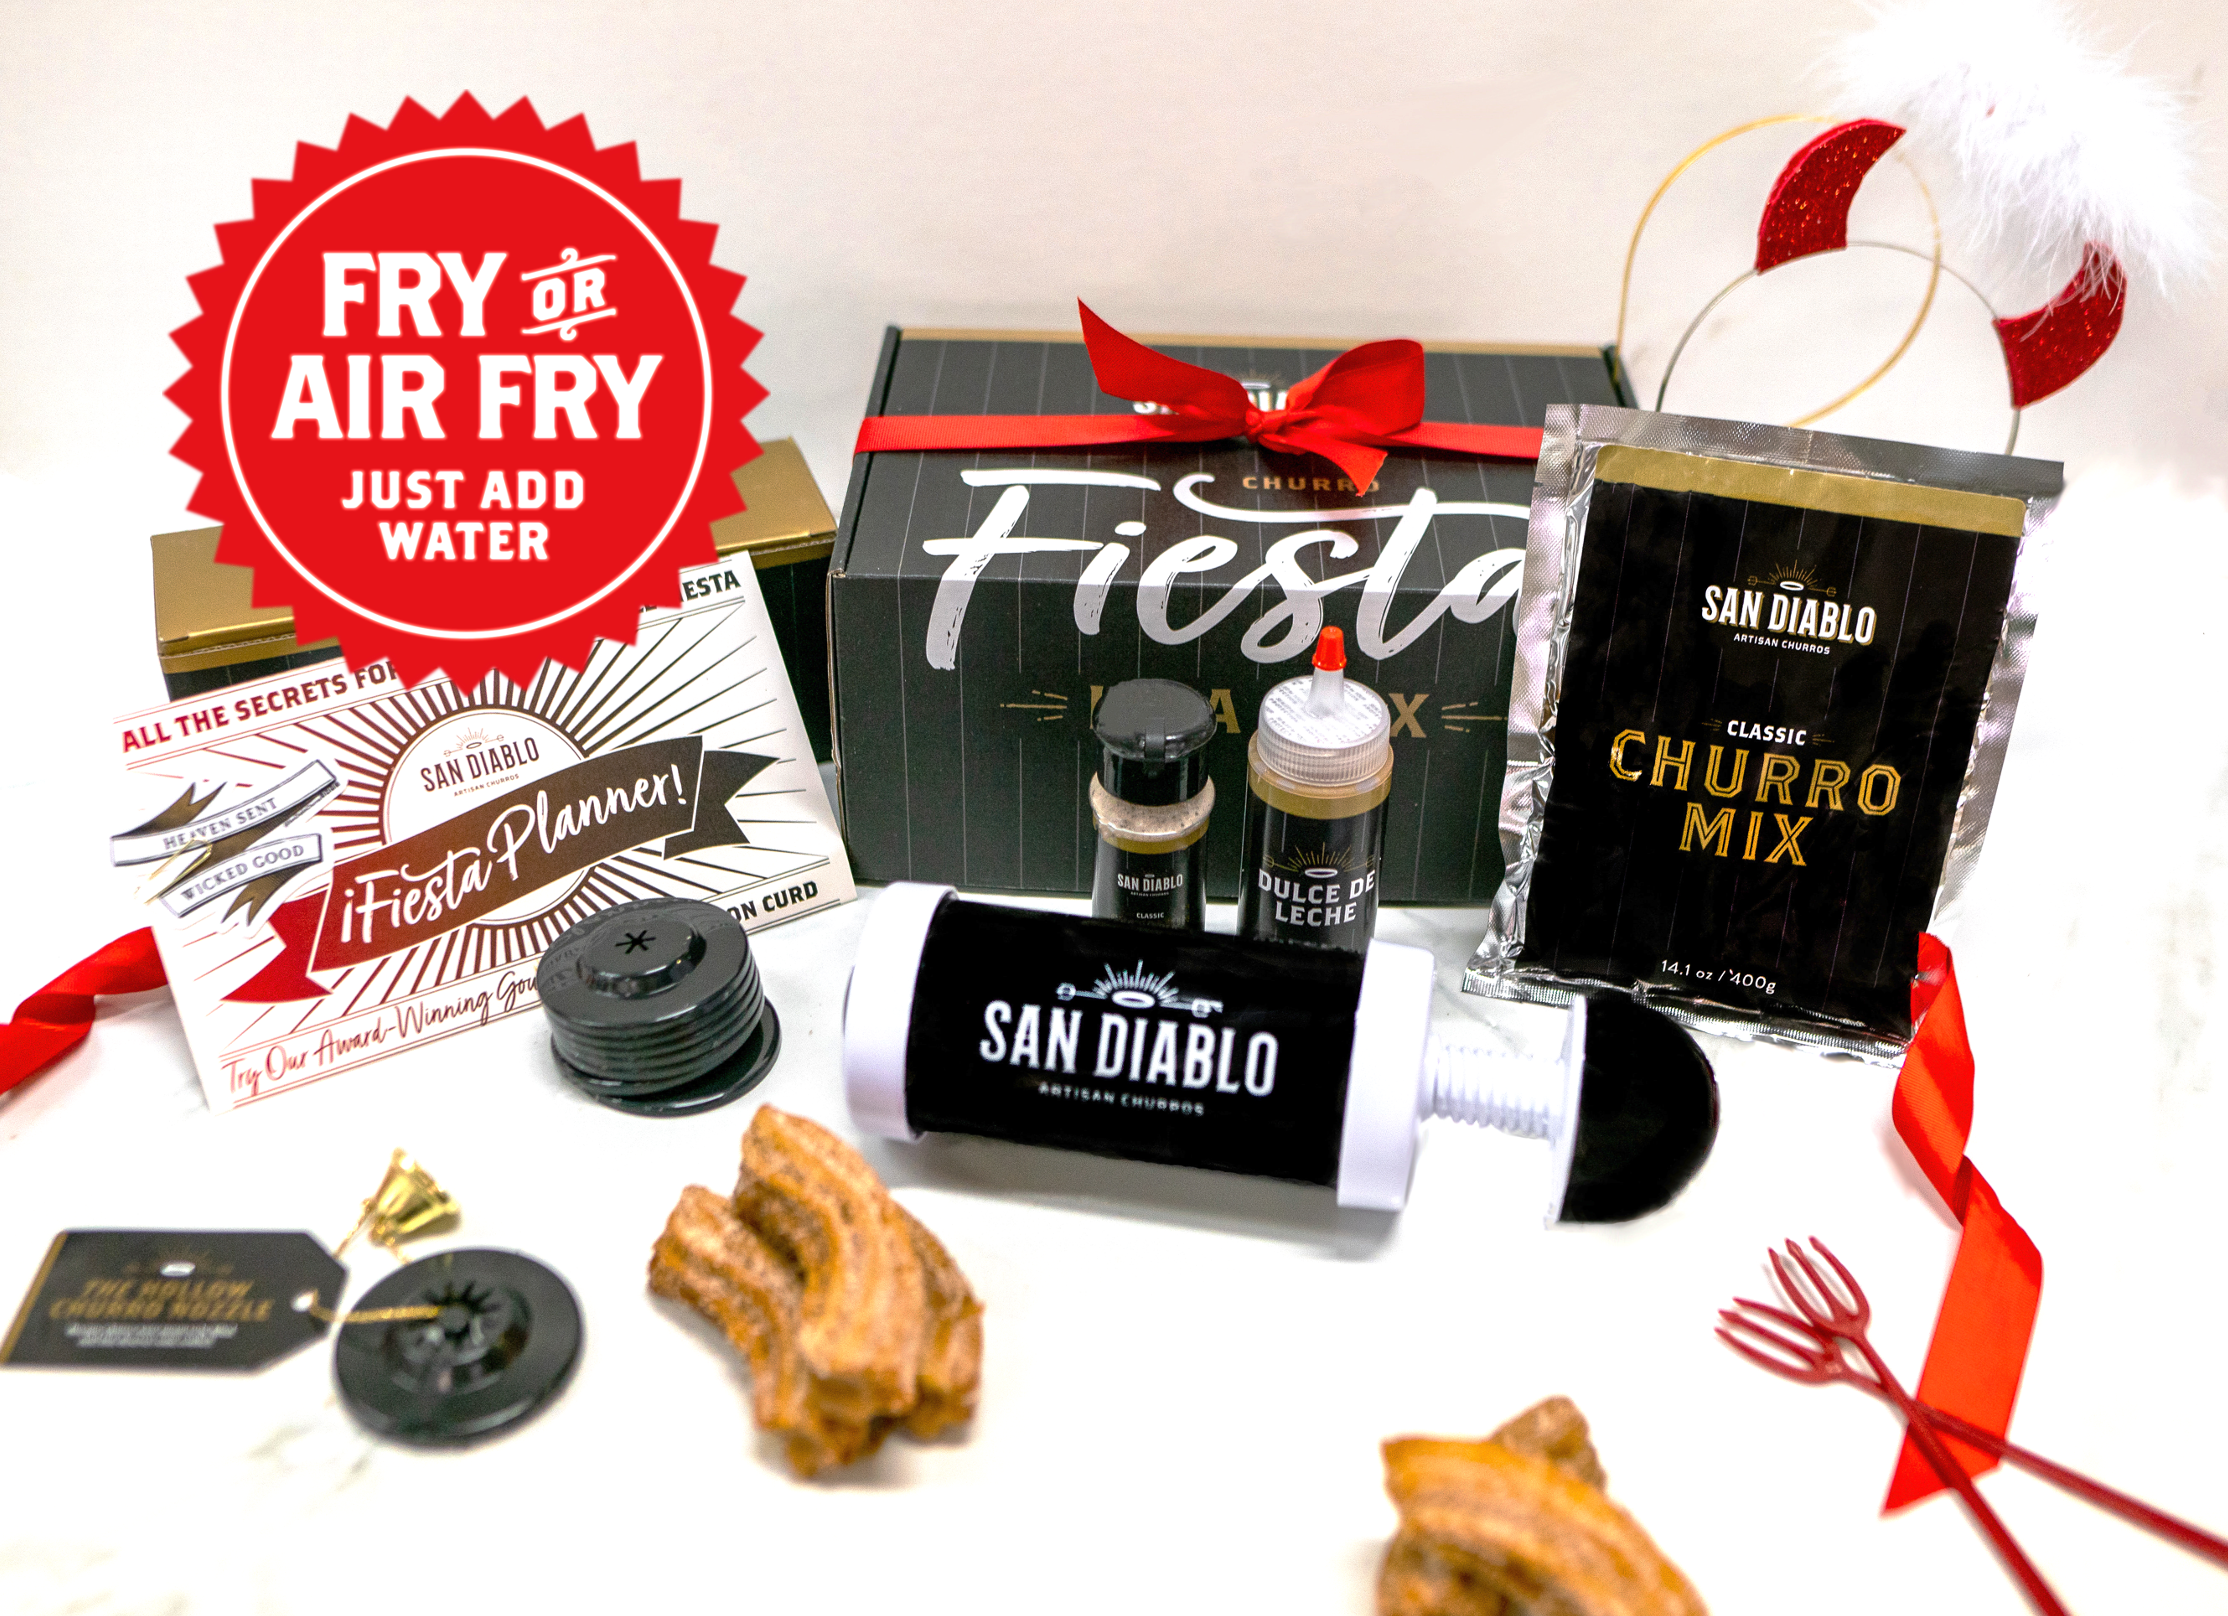 Churro Fiesta in a Box: The Ultimate Churro-Making Kit